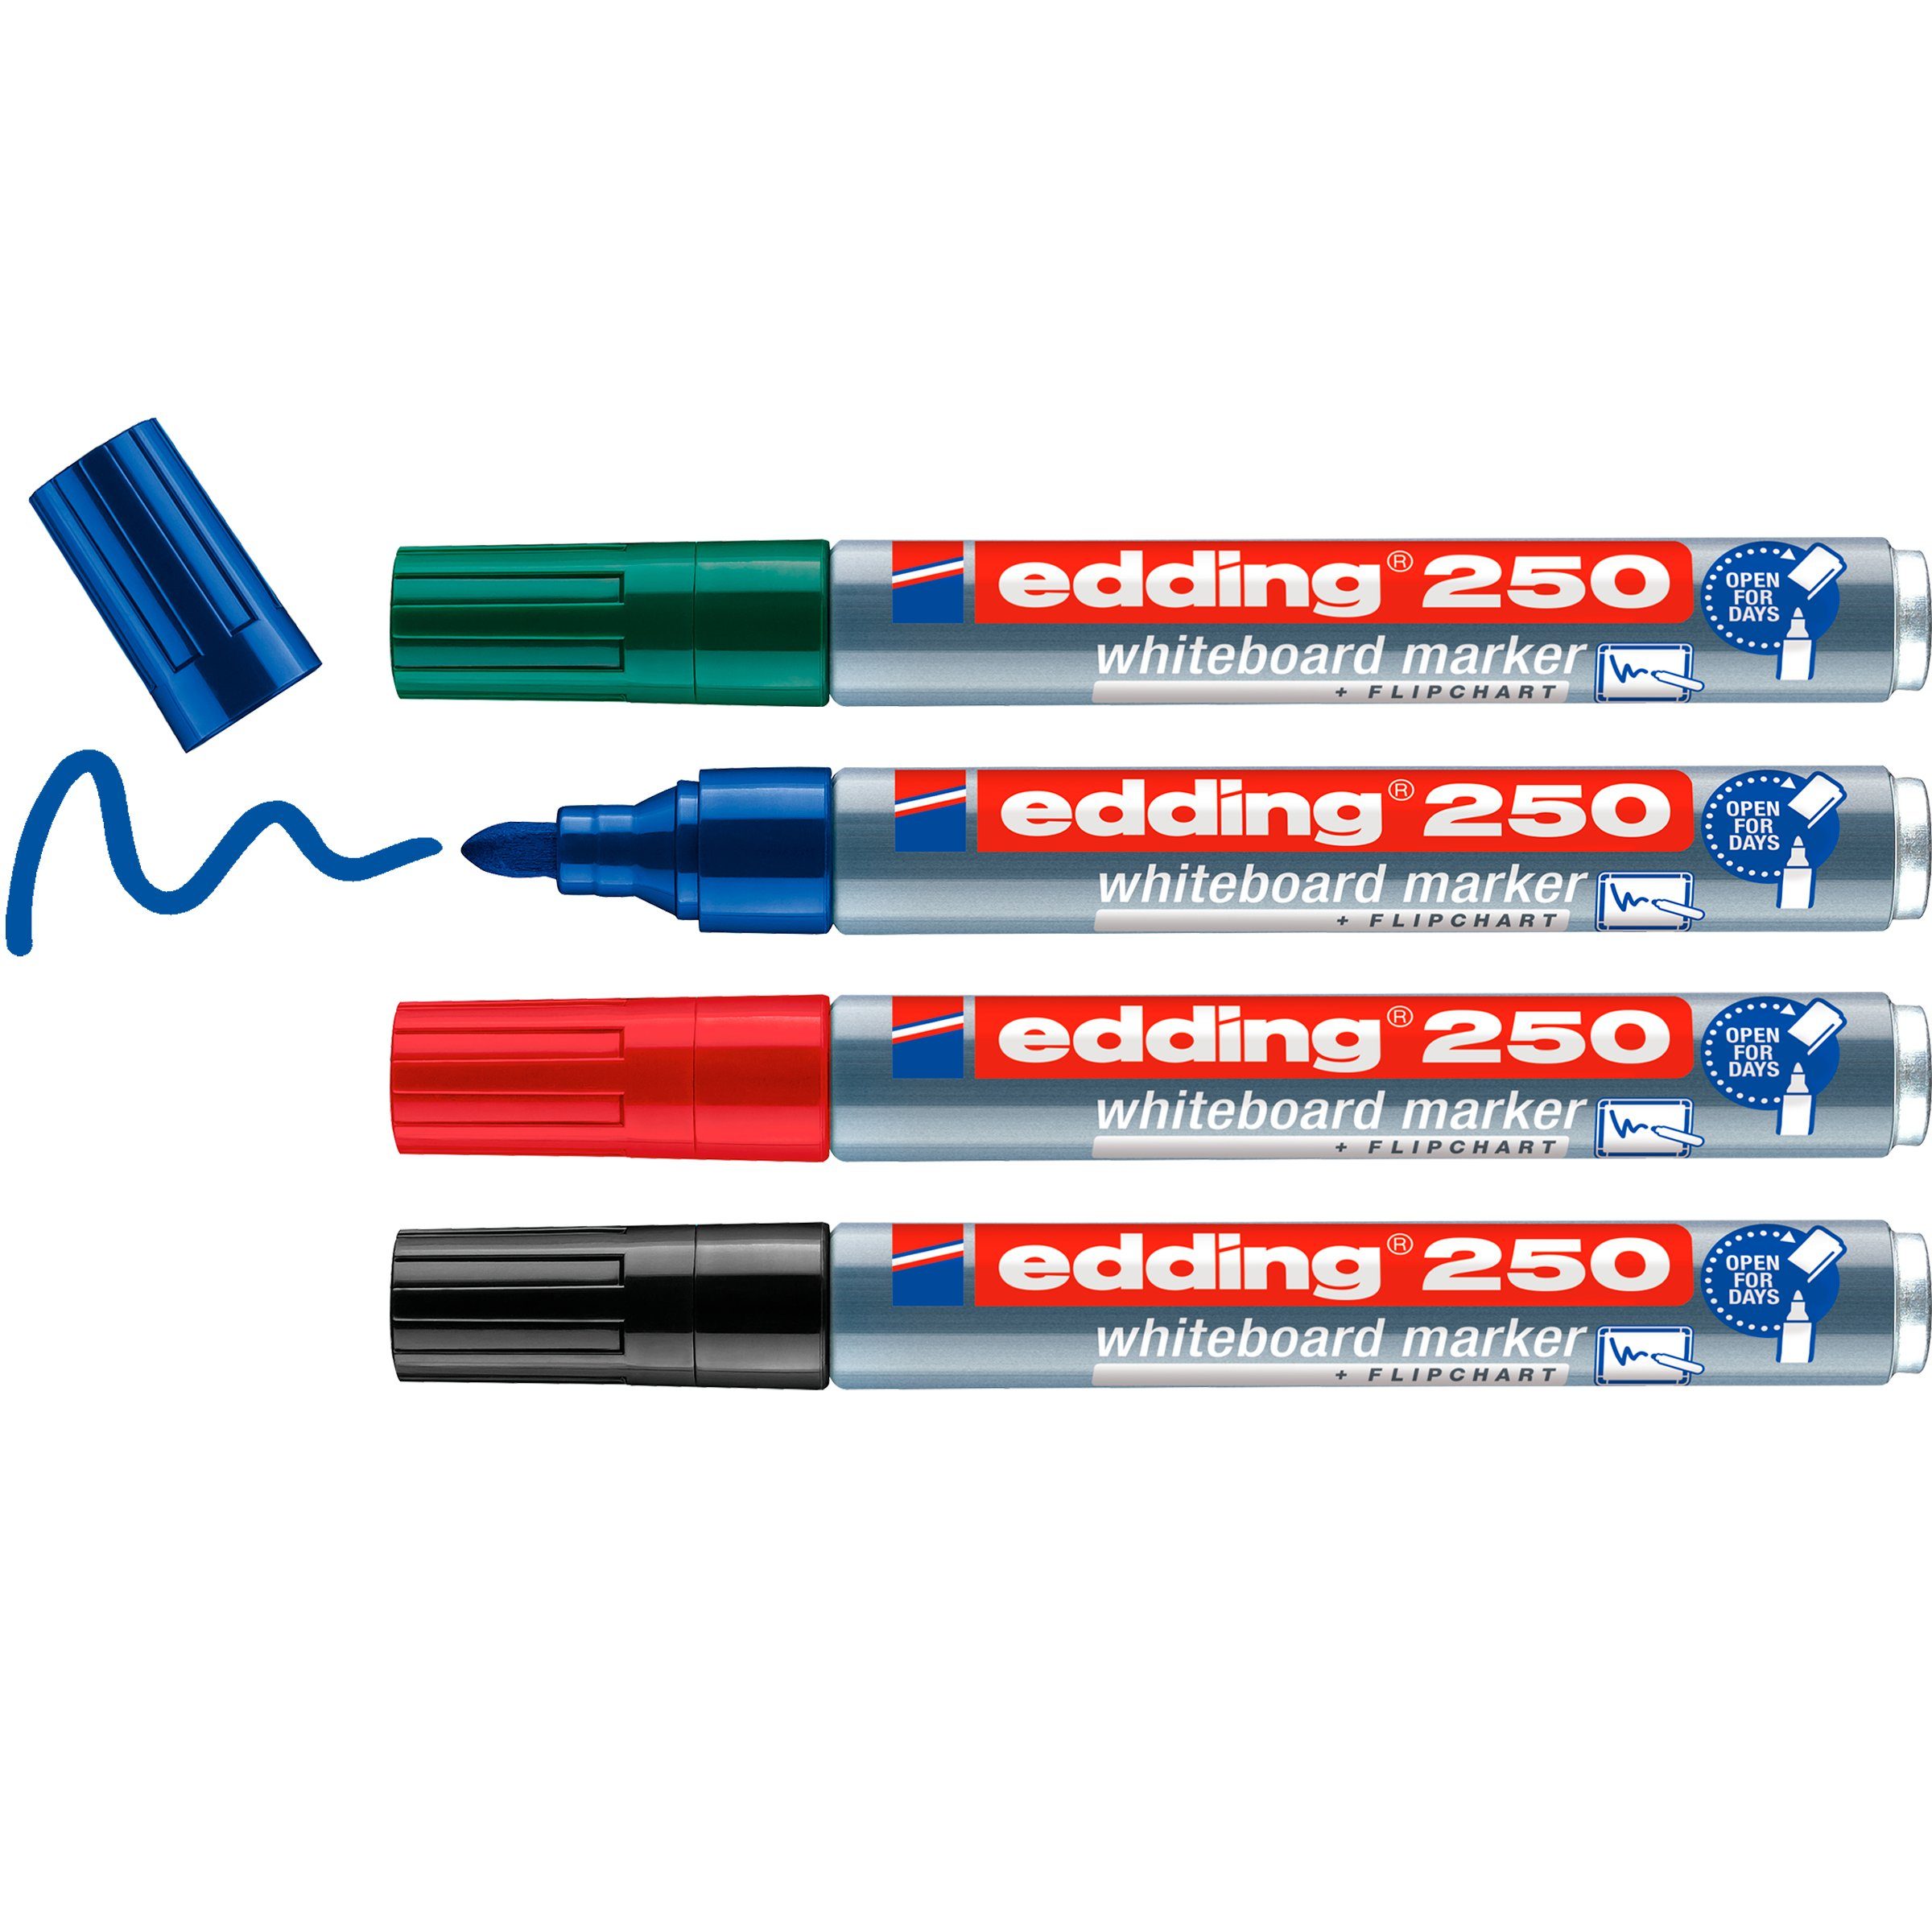 edding Marker 250 Whiteboard Marker mit Aluminium-Schaft Rundspi, 1,5 mm - 3 mm 4er-Set